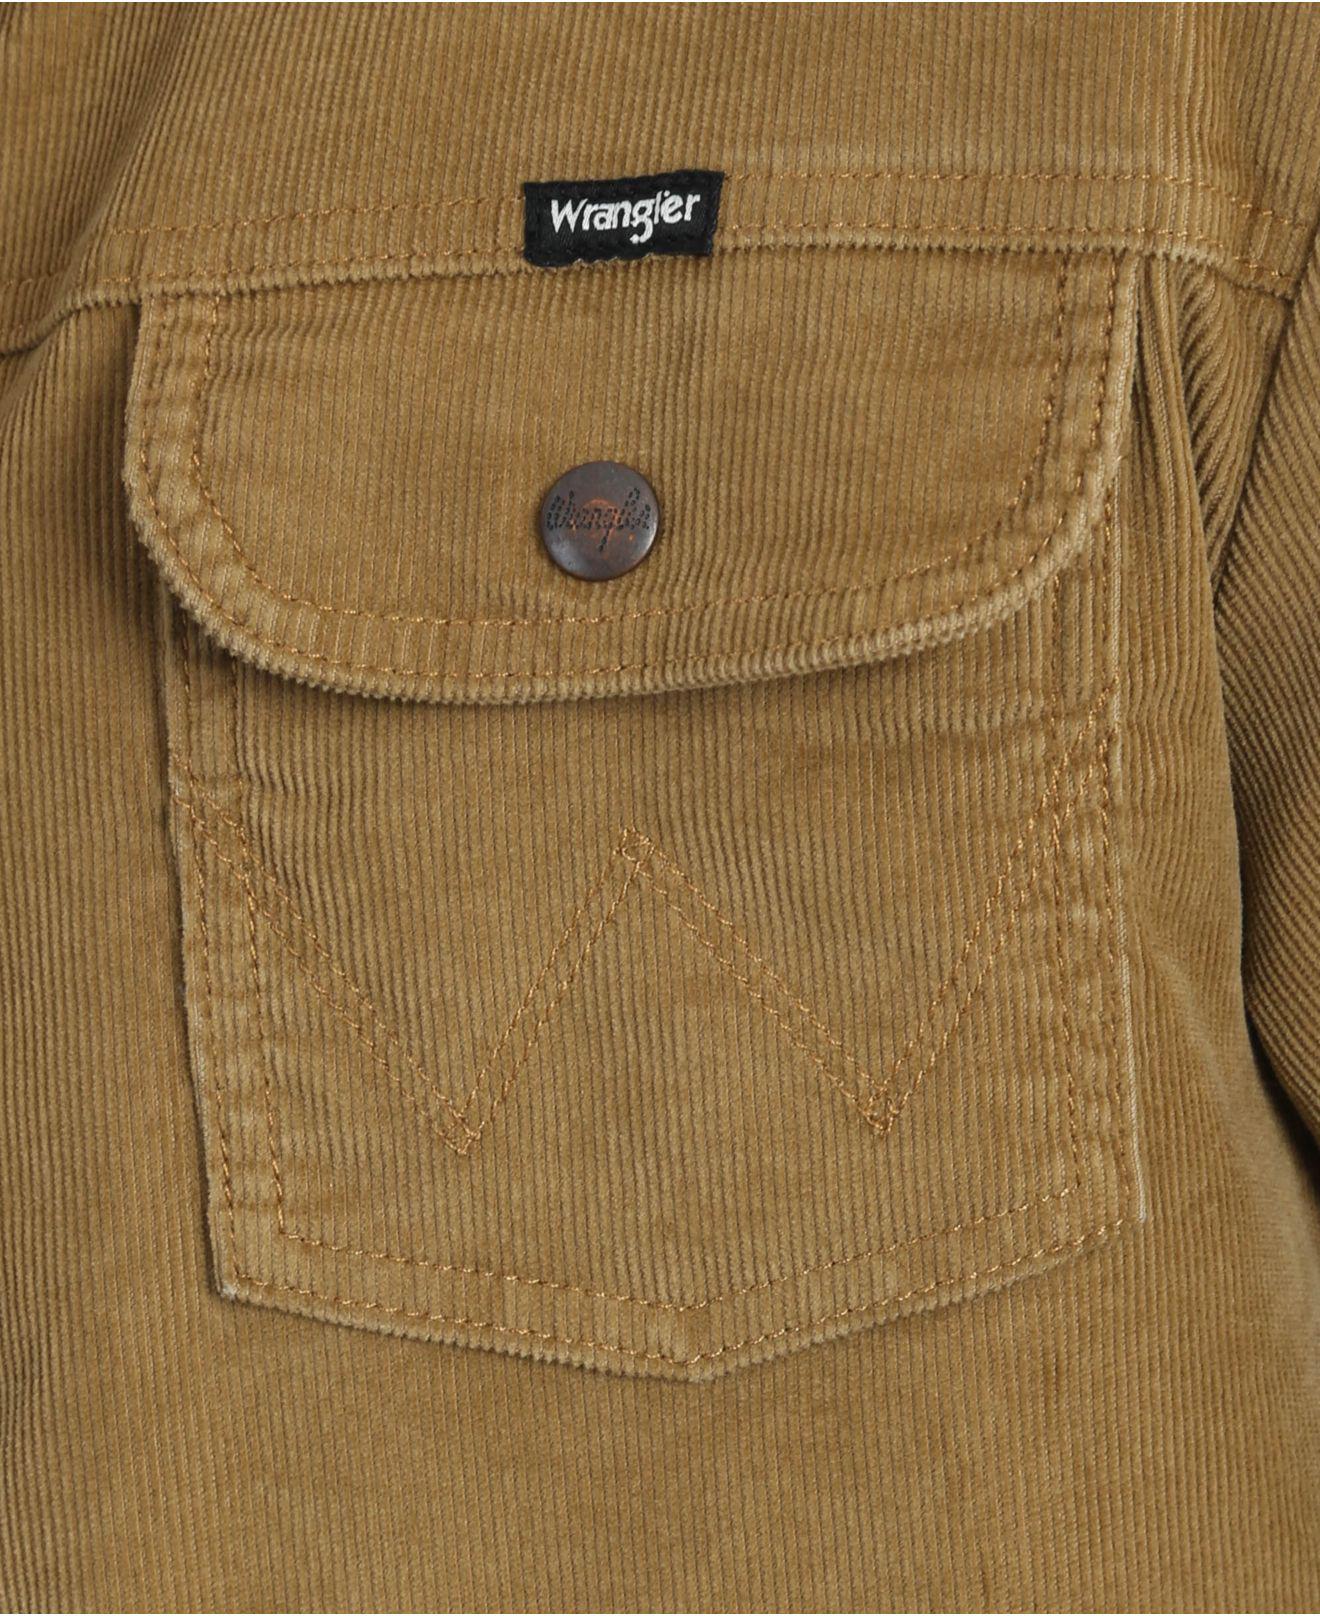 Total 70+ imagen heritage sherpa jacket wrangler - Ecover.mx